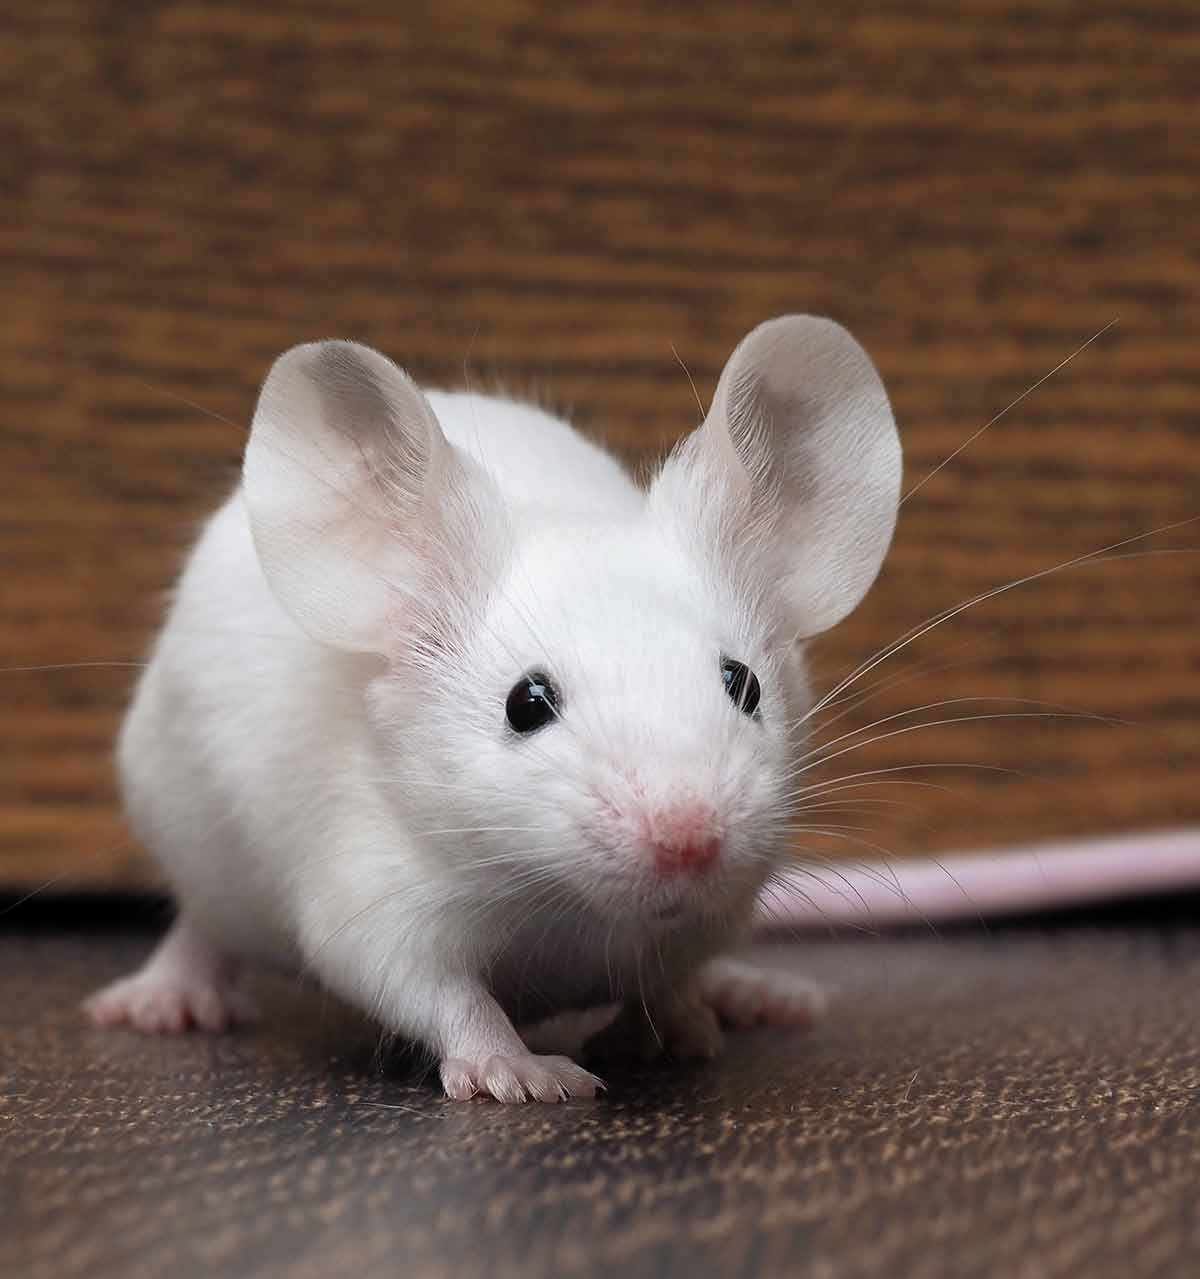 how long do mice live